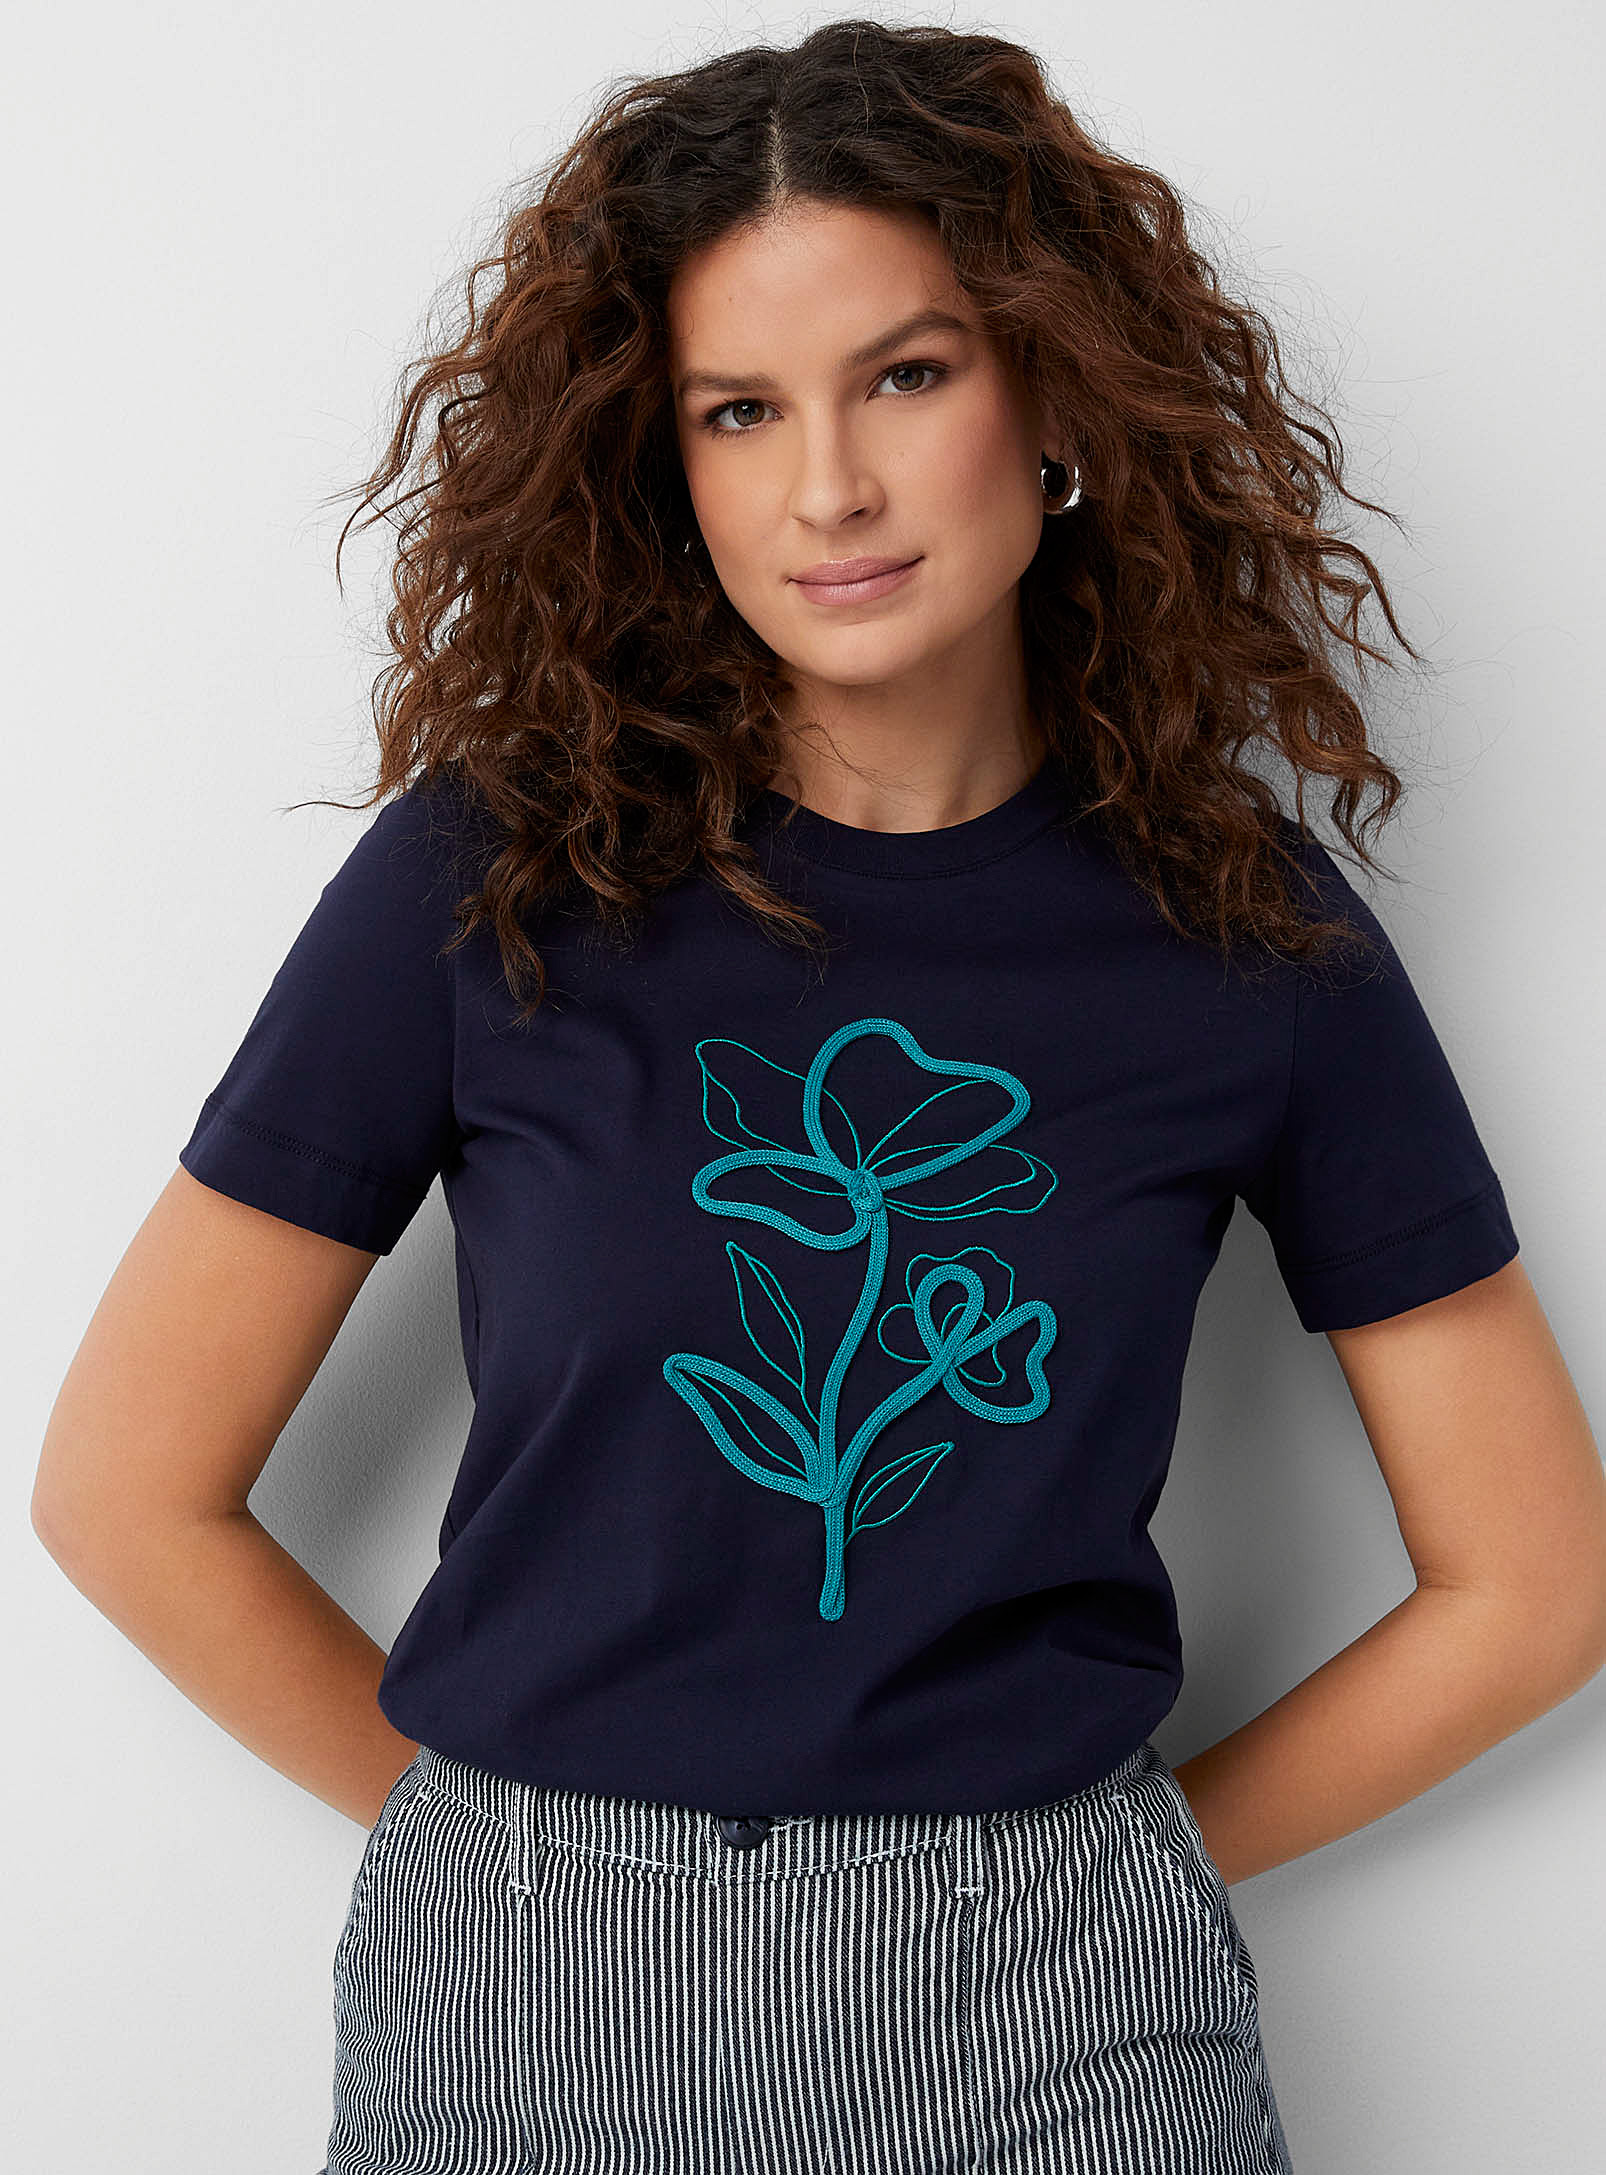 Contemporaine Blue Flower T-shirt In Patterned Blue